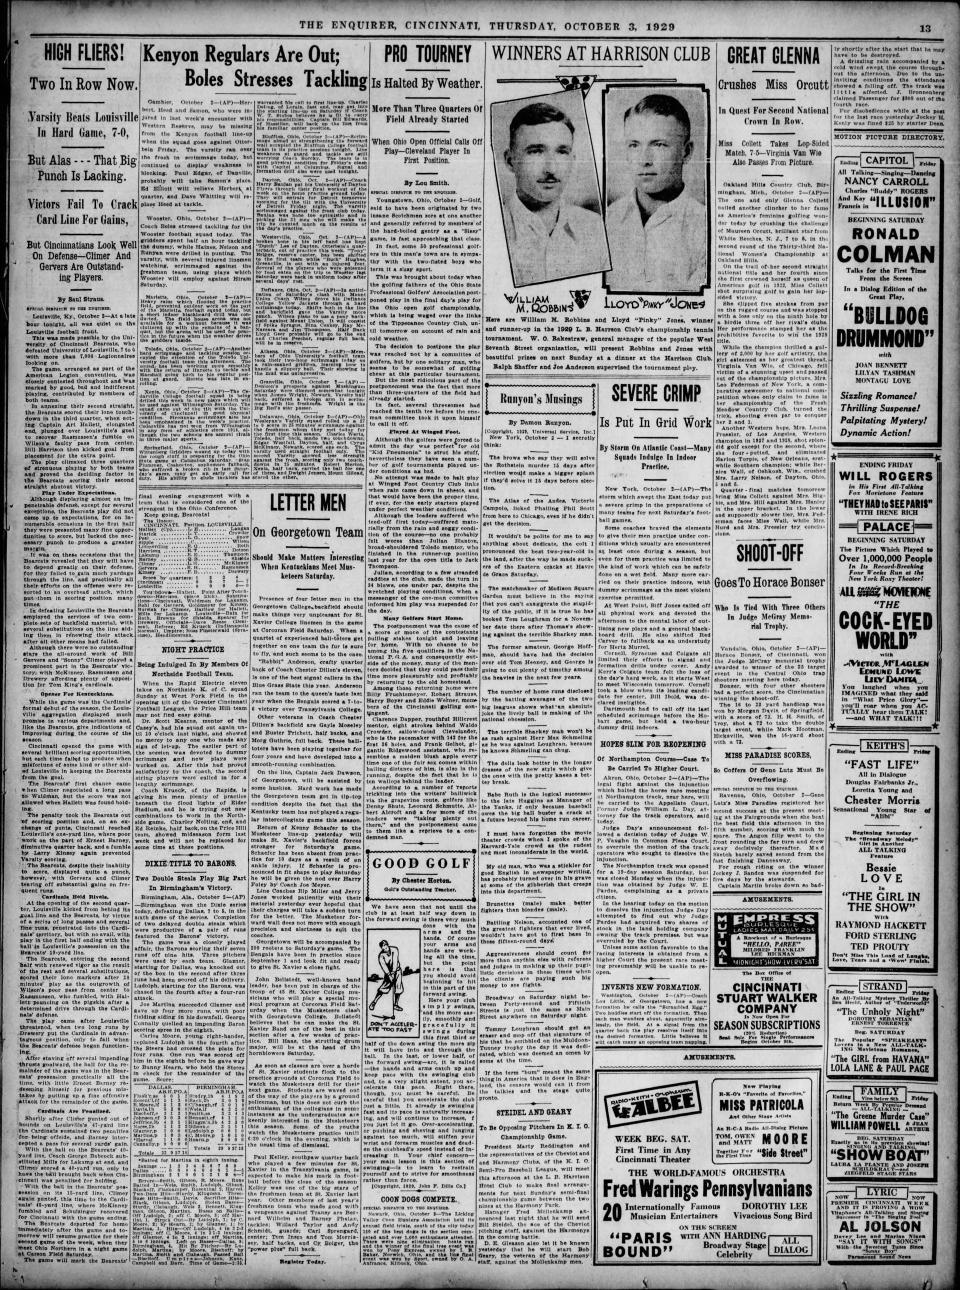 Oct. 3, 1929 Cincinnati Enquirer coverage of Cincinnati vs. Louisville football game.